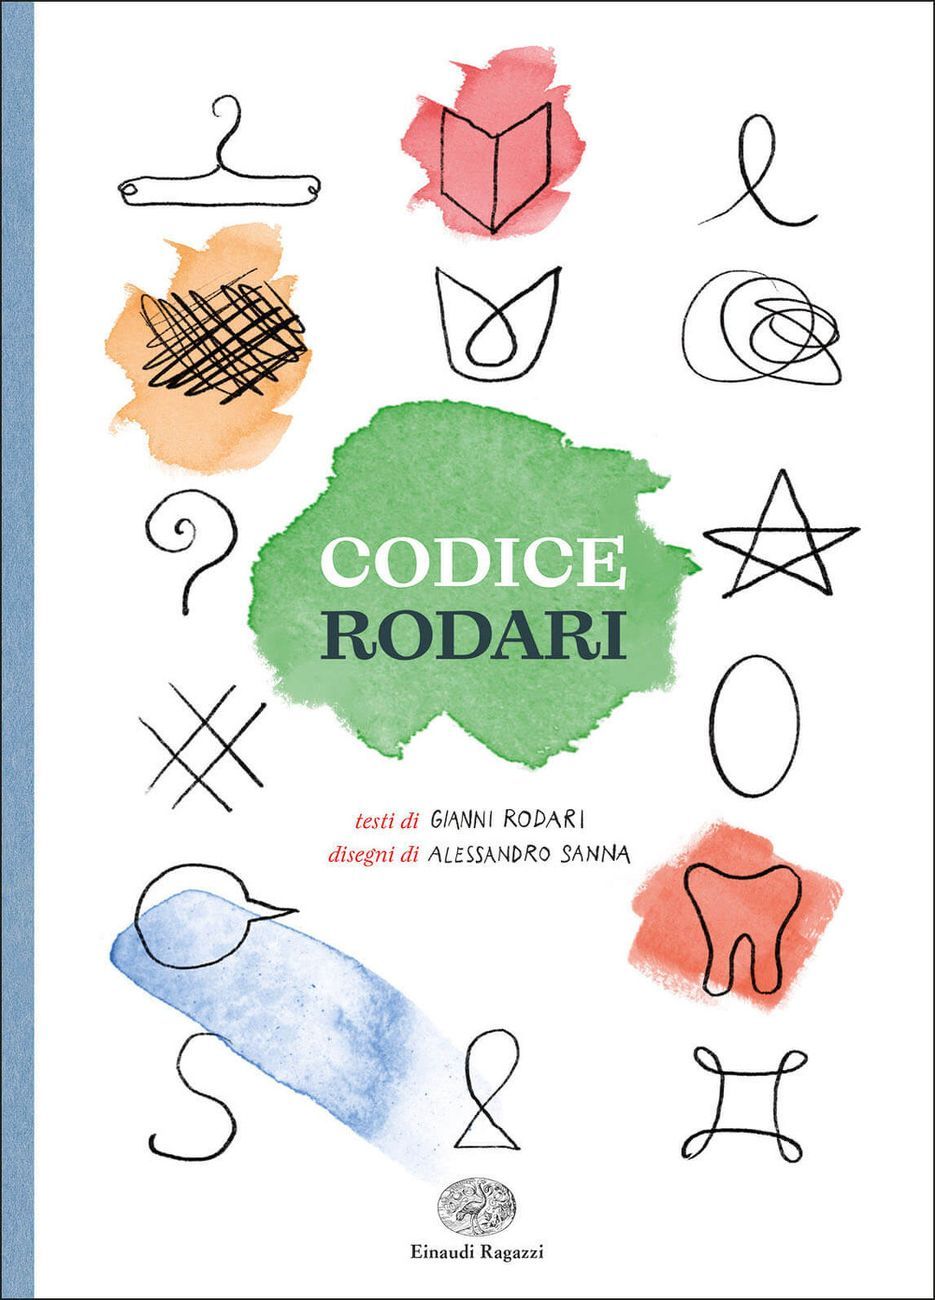 Gianni Rodari & Alessandro Sanna – Codice Rodari (Einaudi Ragazzi, Milano 2020)